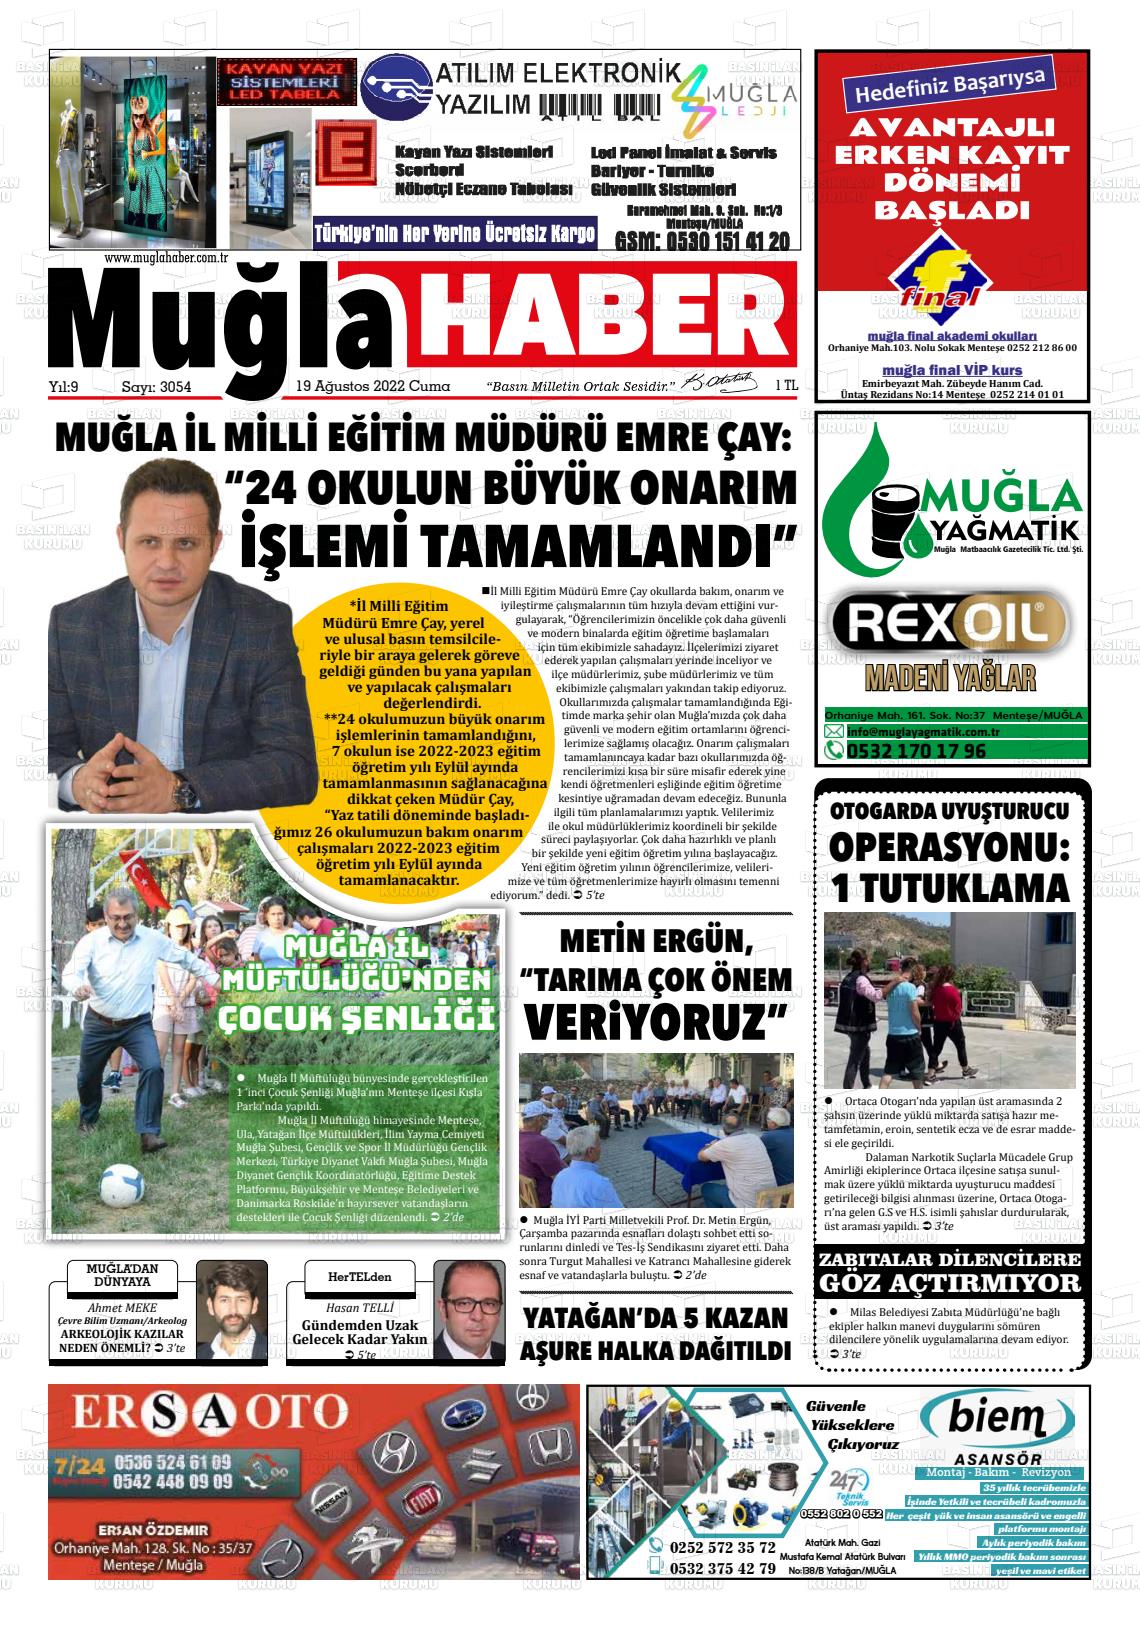 19 Ağustos 2022 Muğla Haber Gazete Manşeti